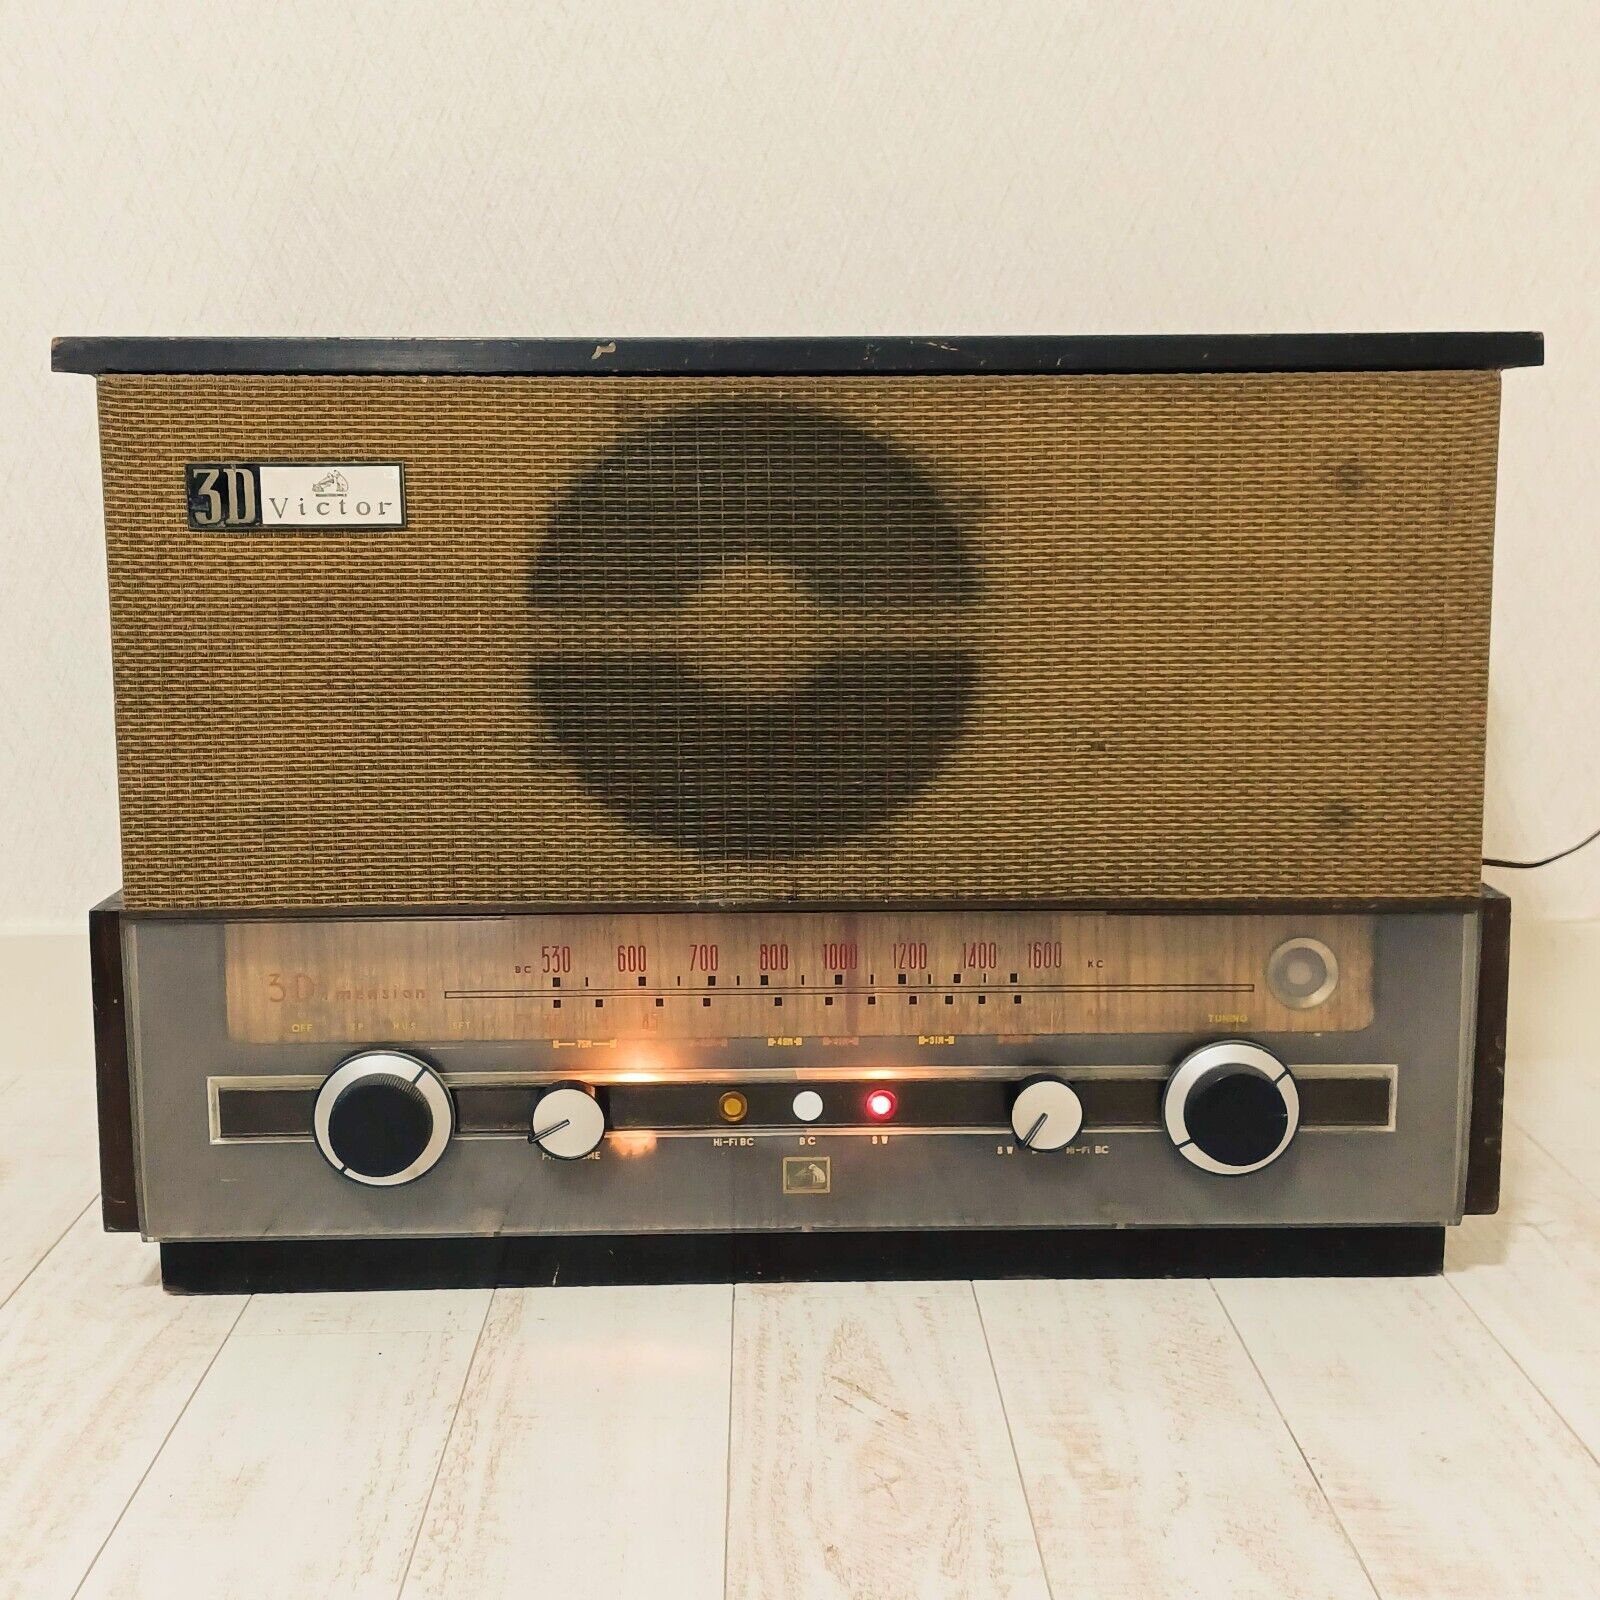 Victor Vacuum Tube Radio 7A-2701 Made in Japan 1959 Retro Vintage